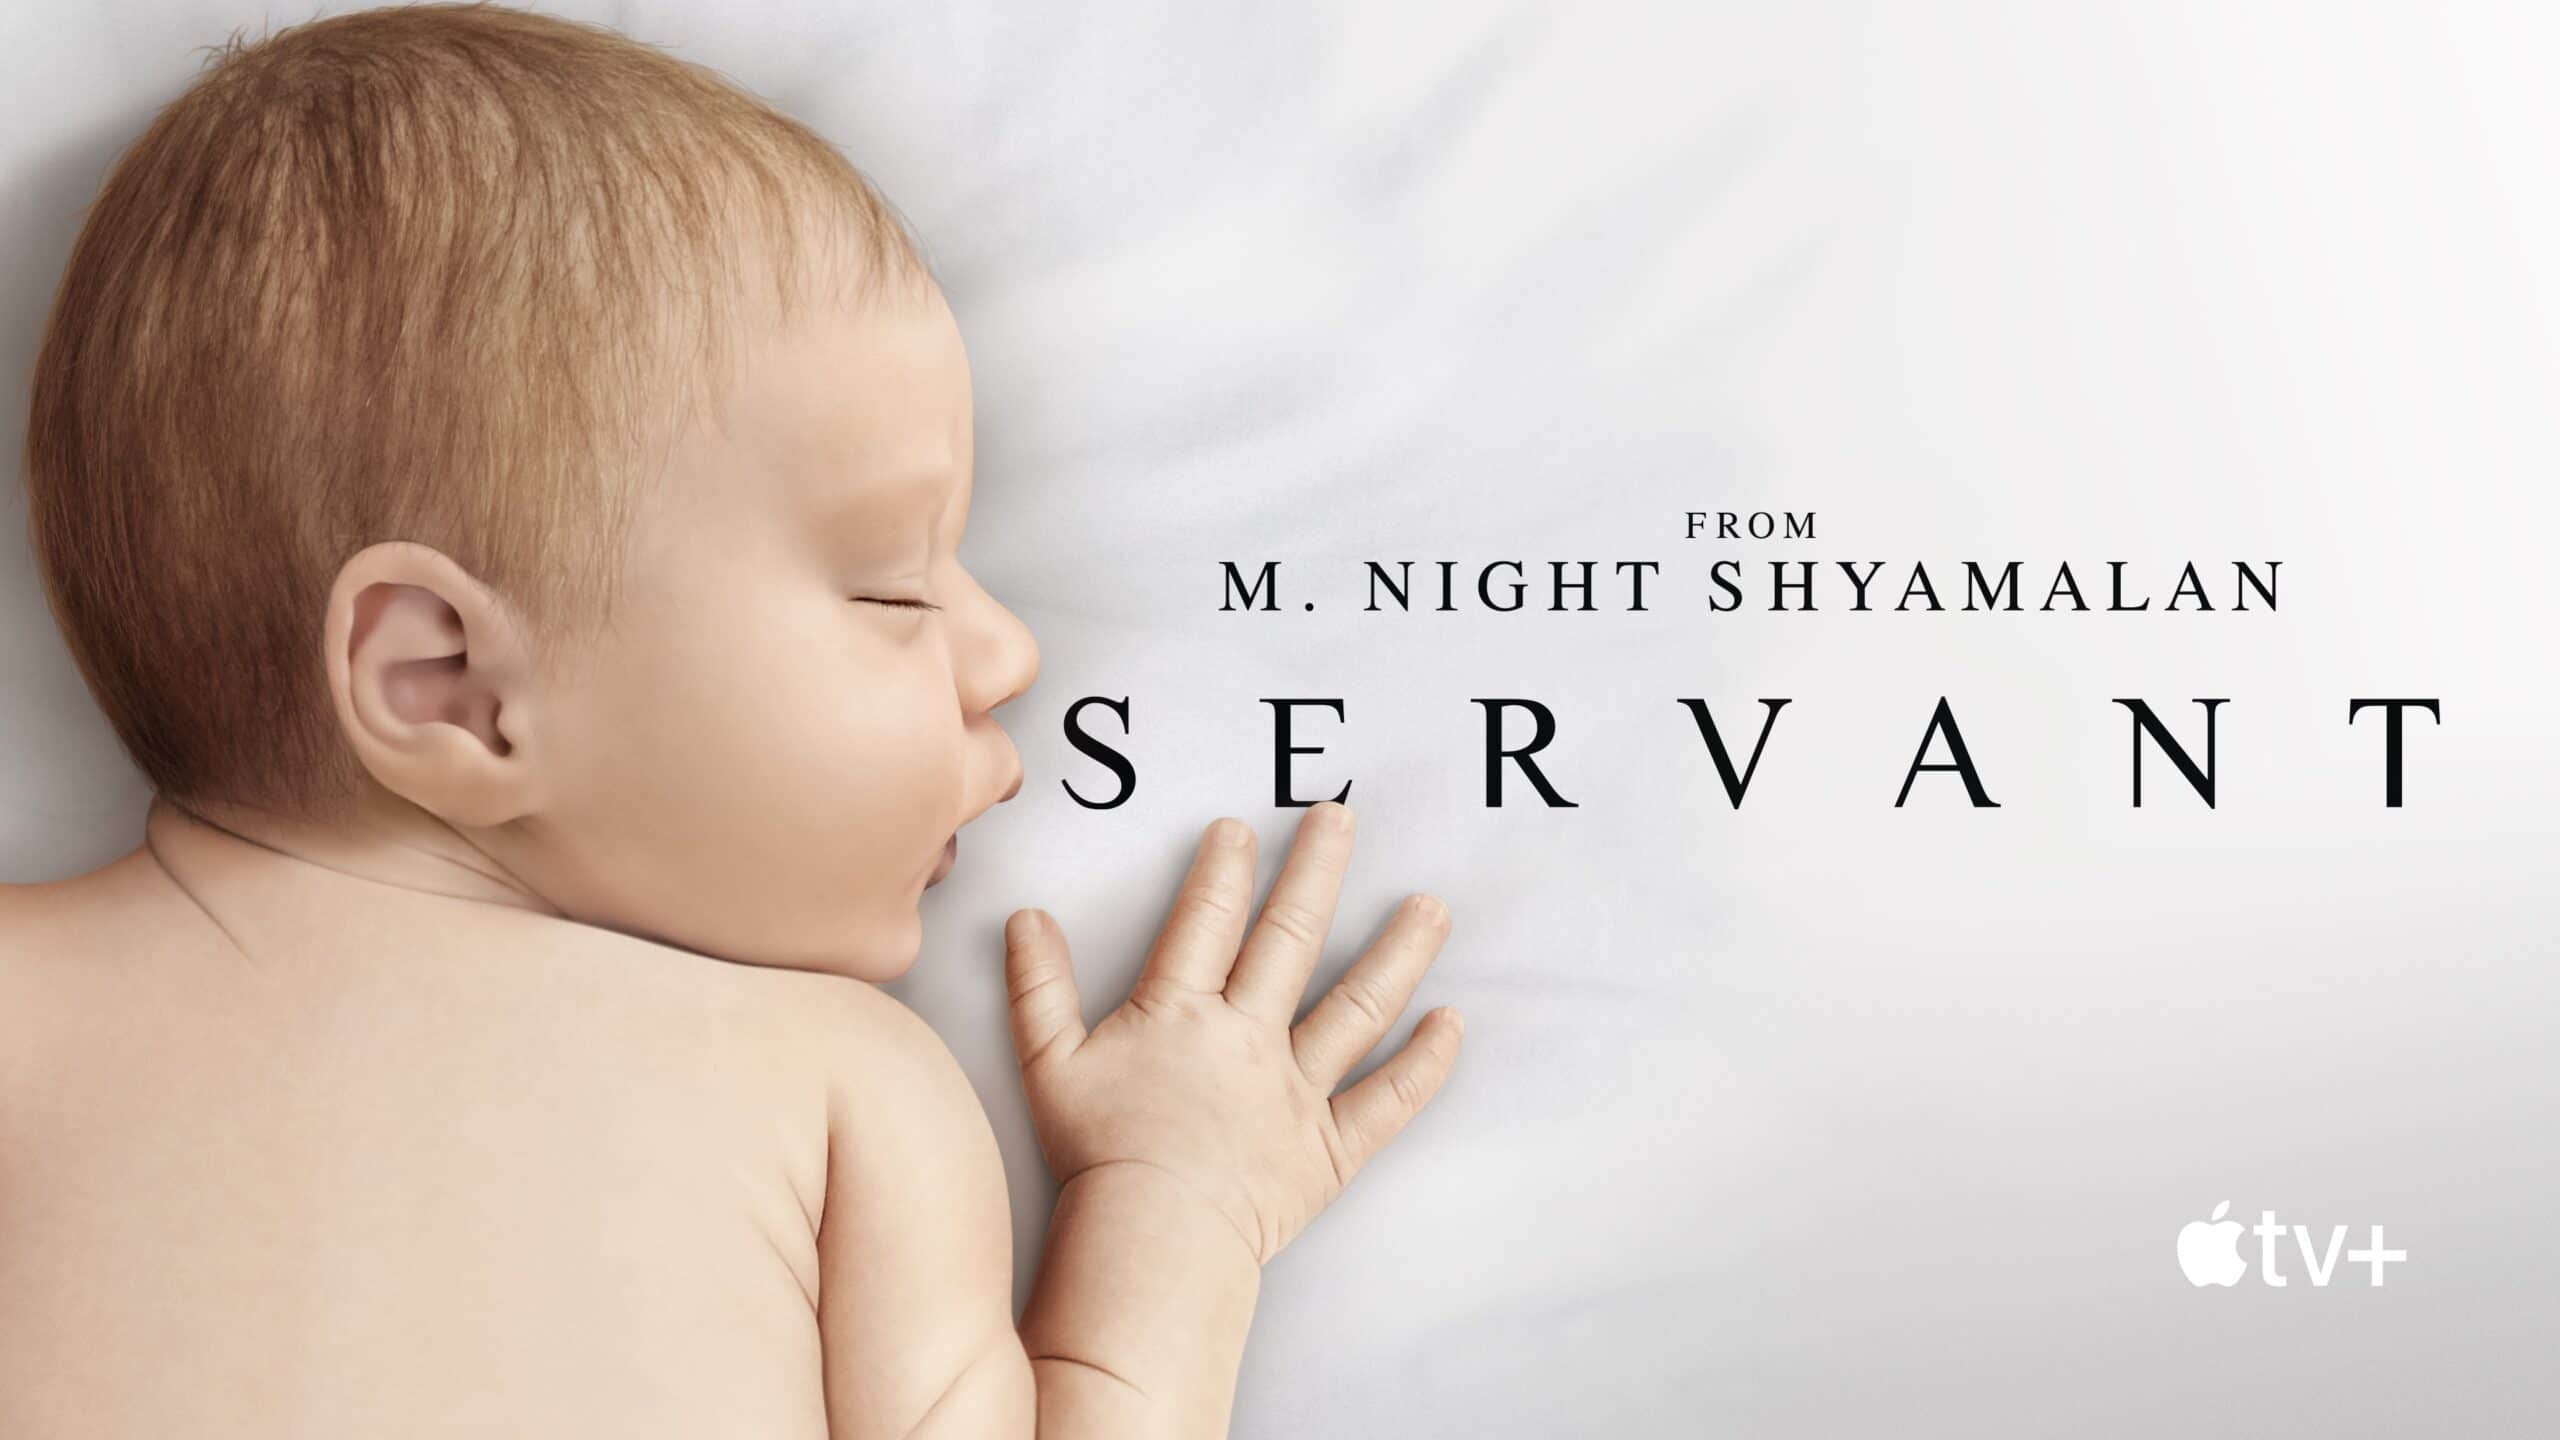 Imagem promocional de "Servant"